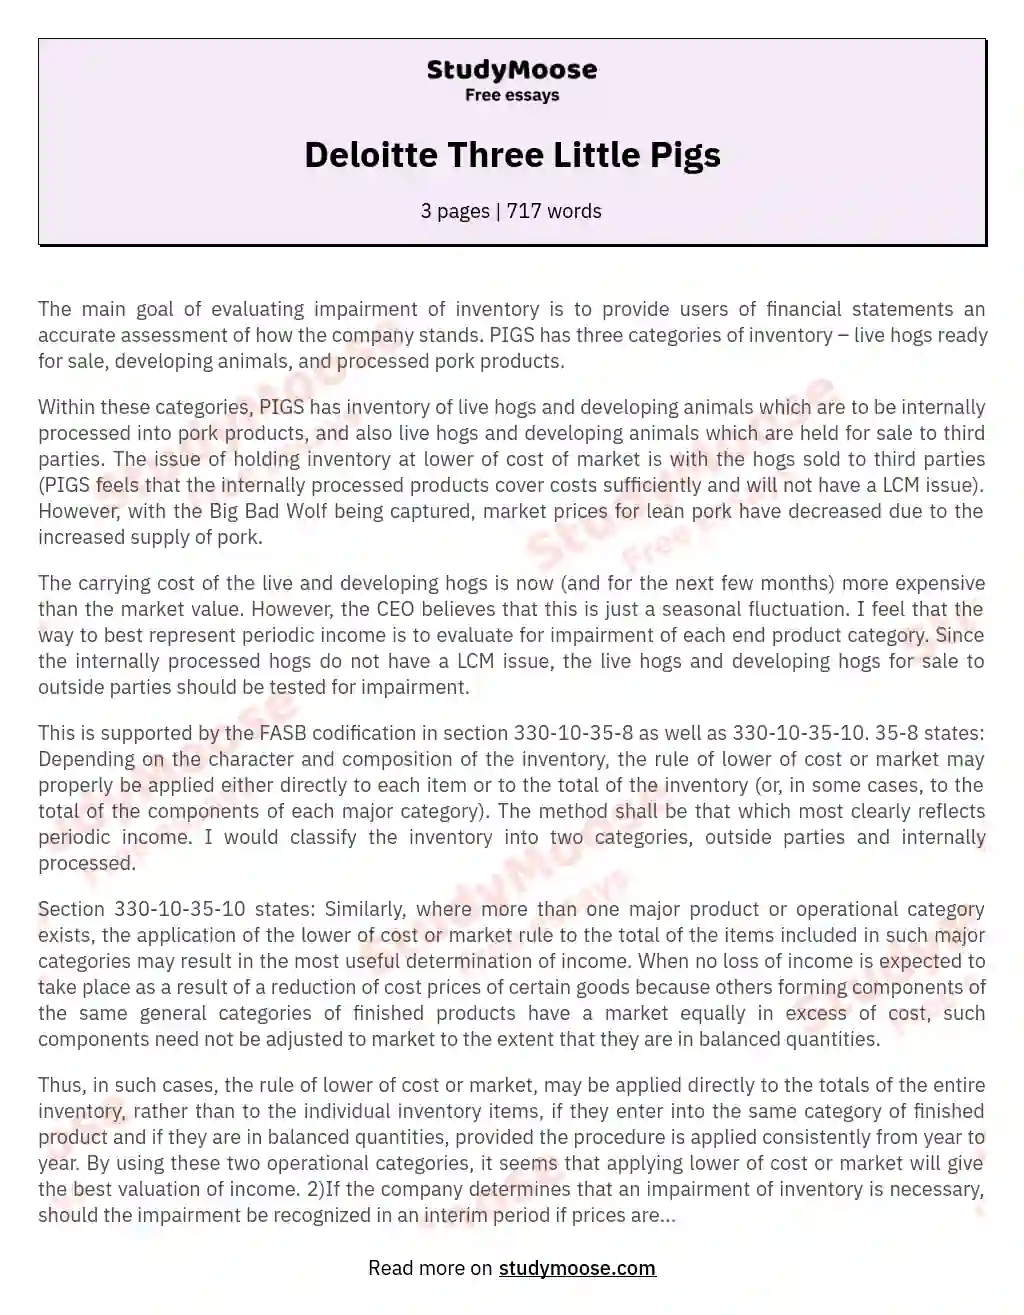 Deloitte Three Little Pigs essay